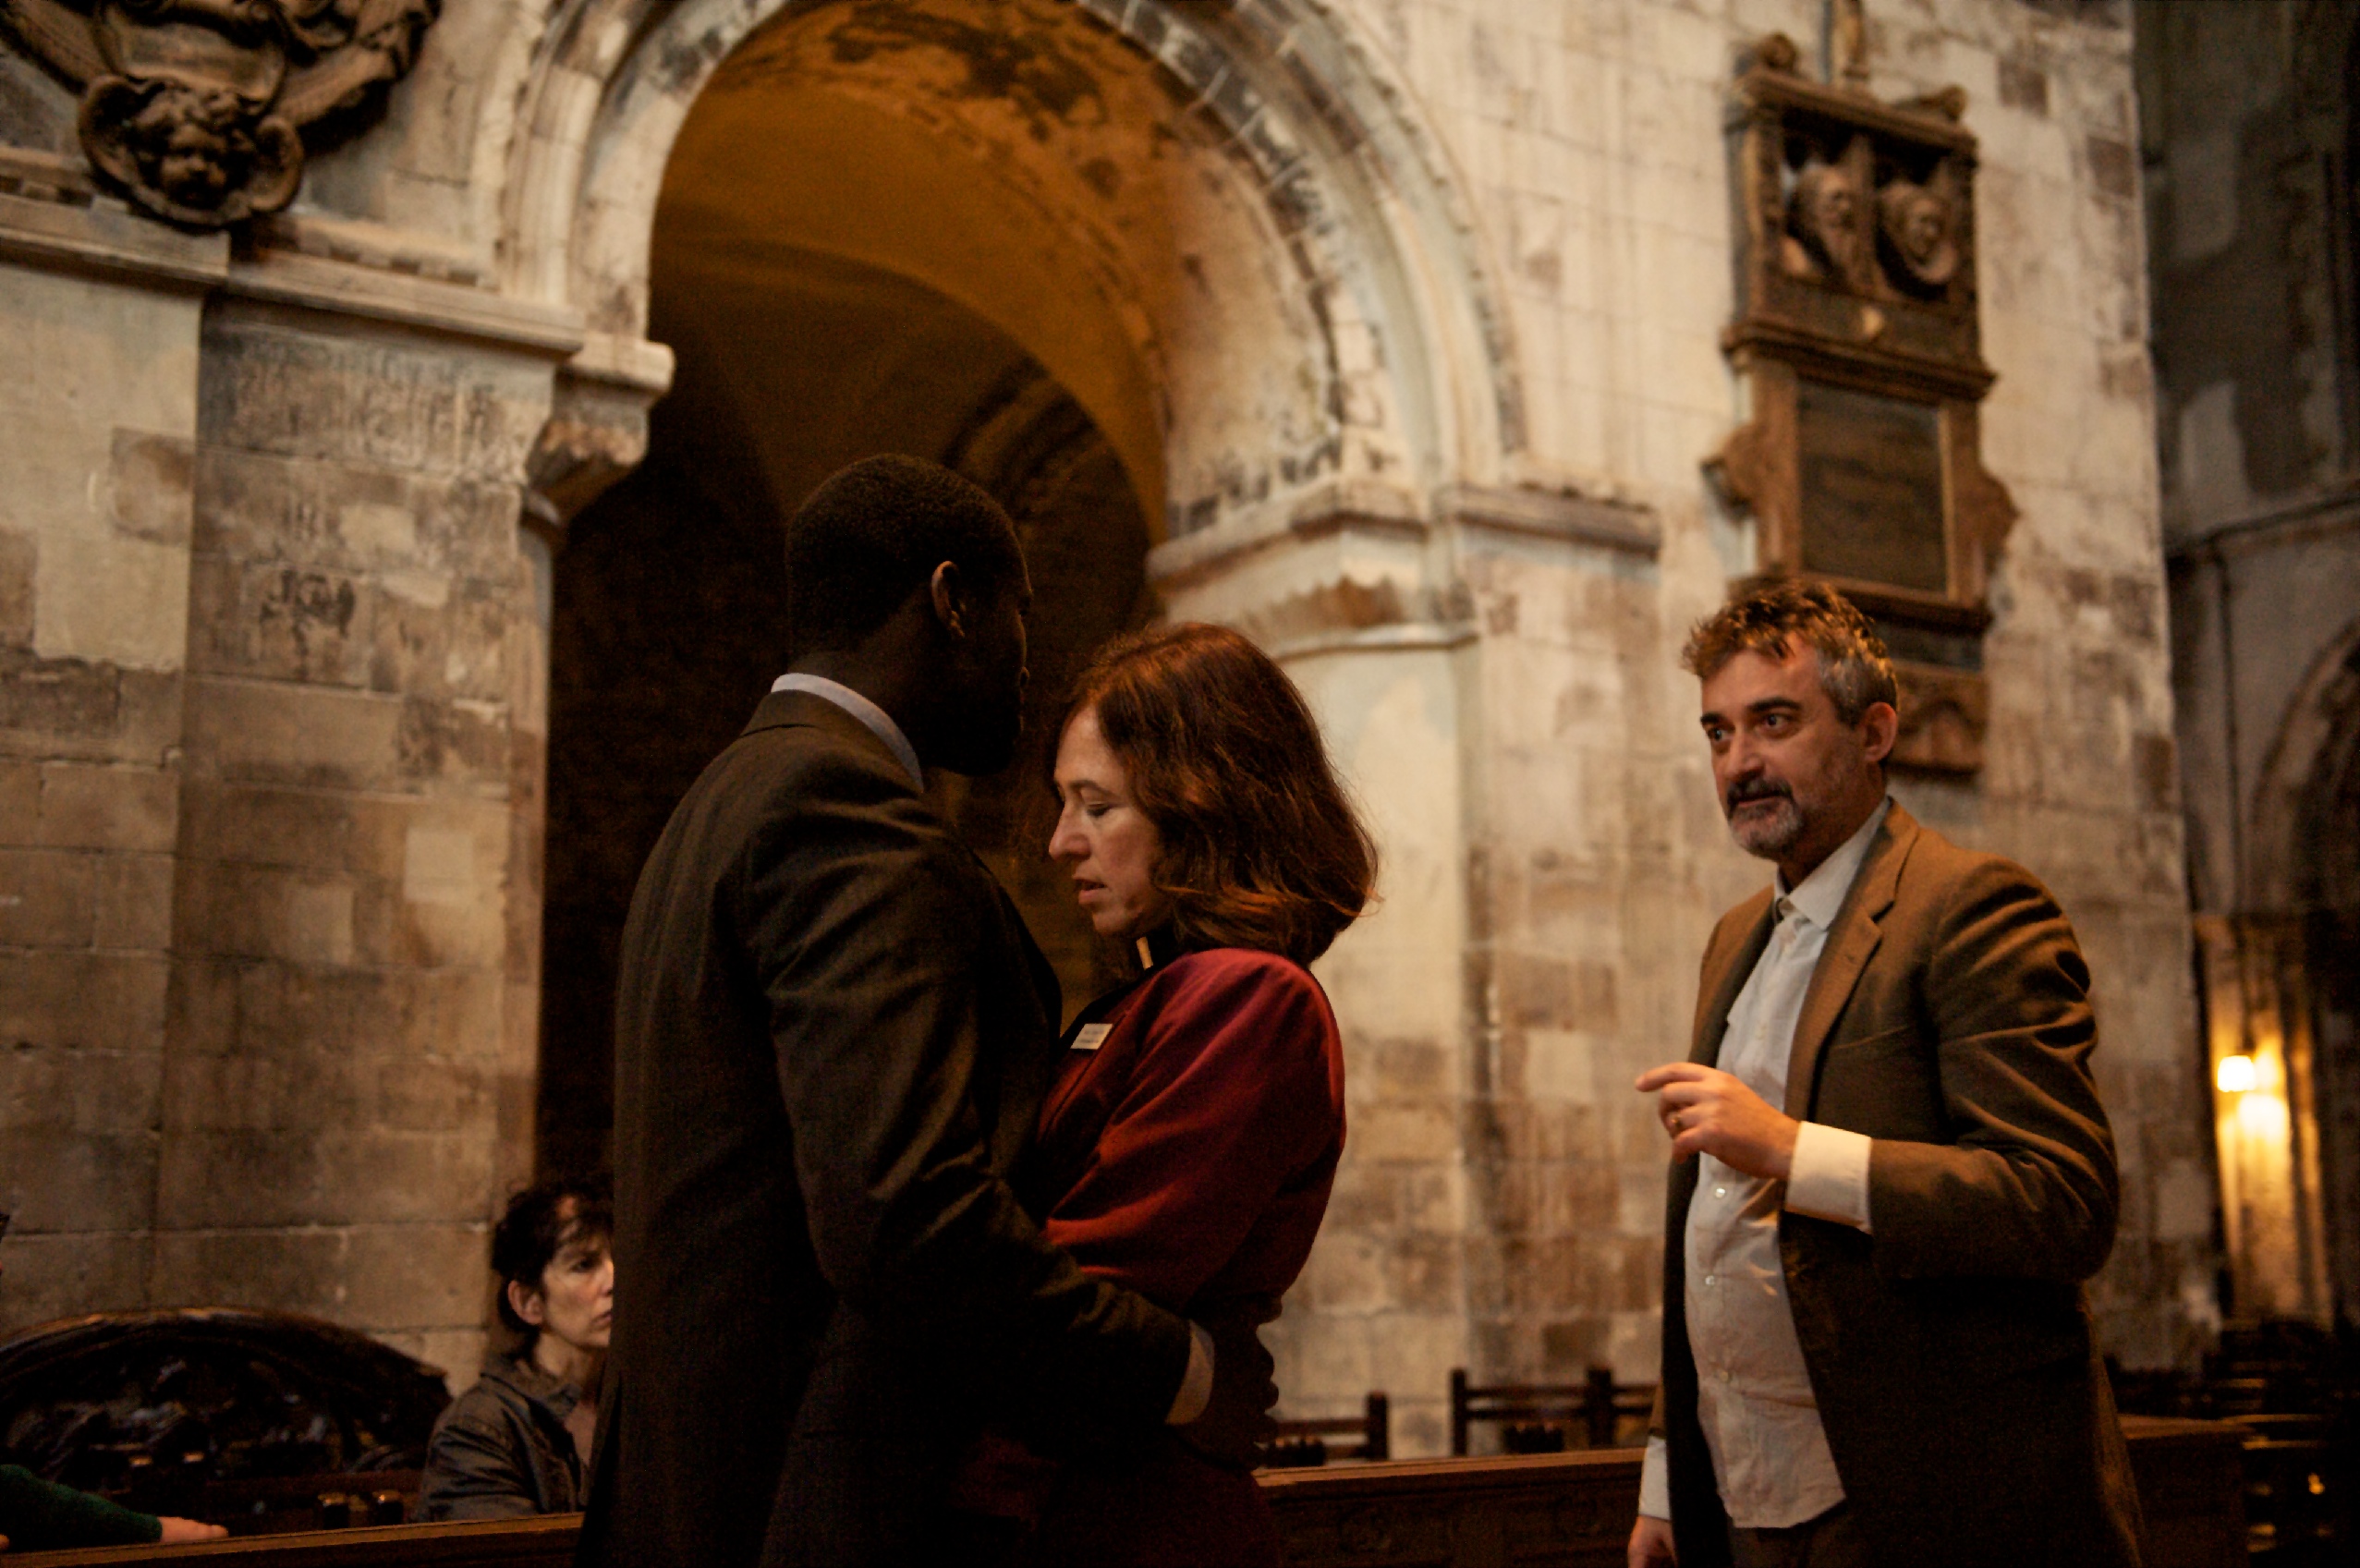 Kristaps (Mihai Arsene), Clare (Rebecca Thorn), Johnny (Leon Stewart) in STILL I PRAY at Barbican (2012)